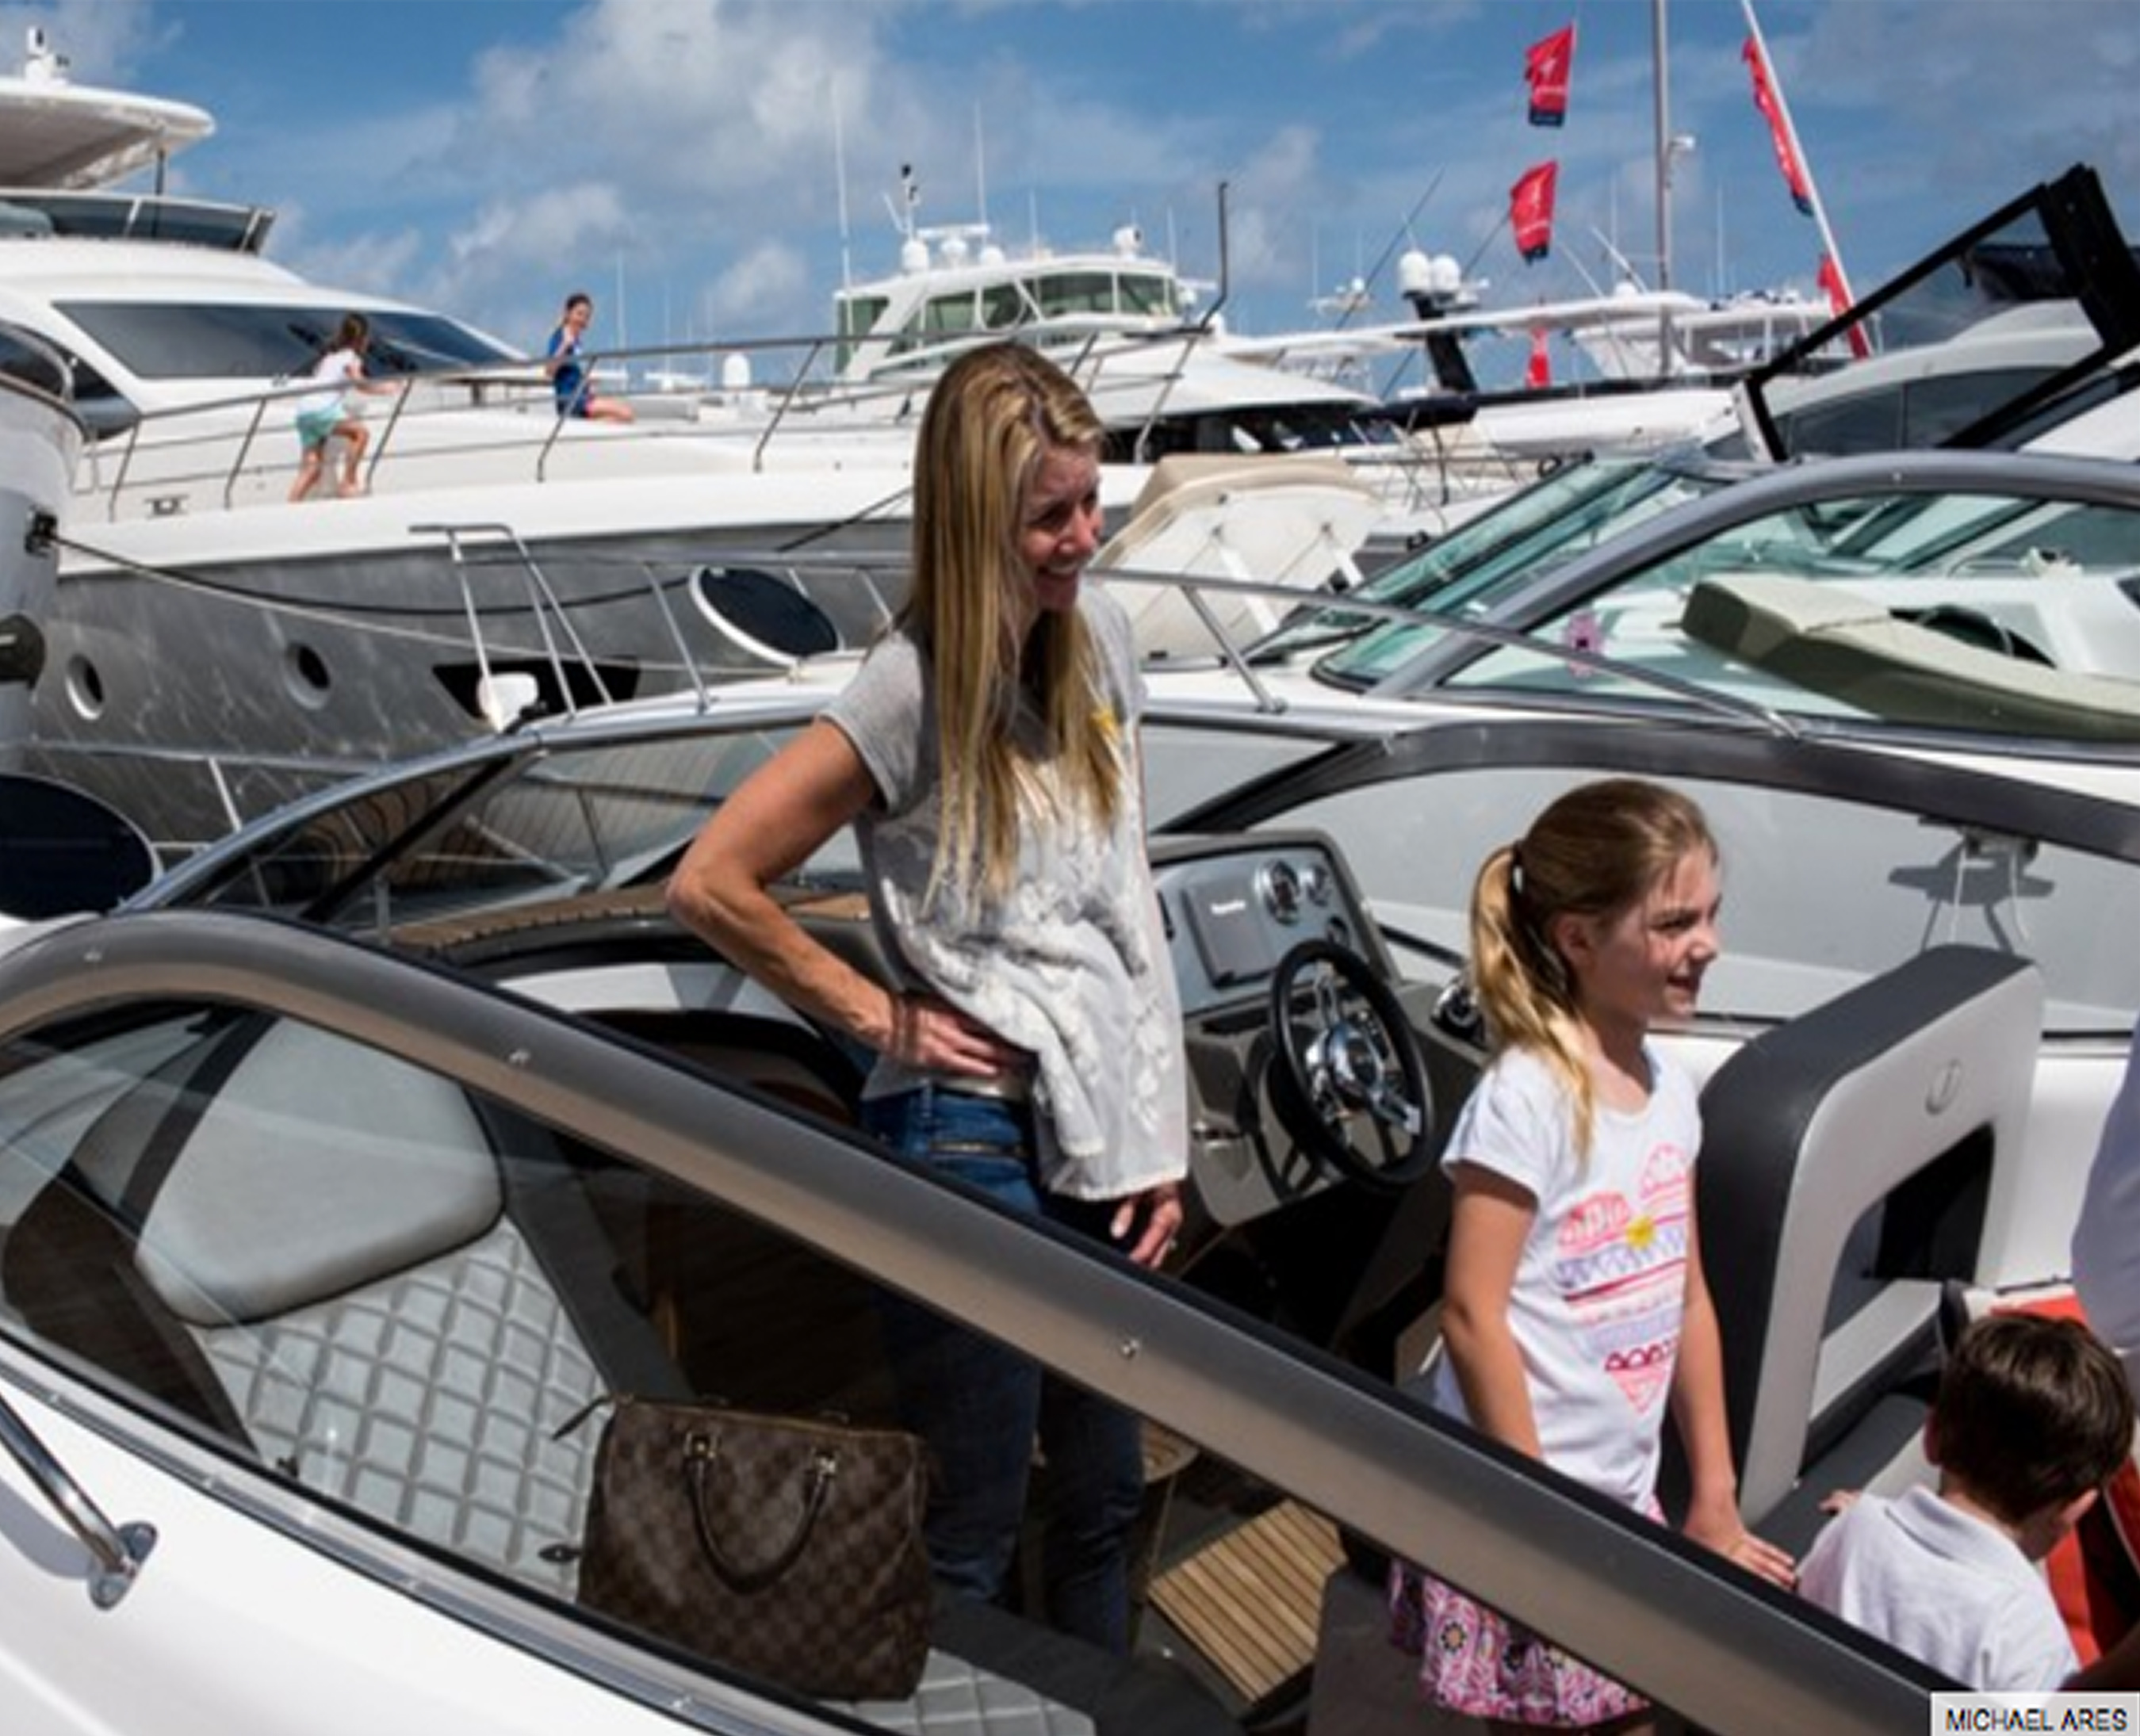 Boatload of fun: Visitors soak up sunshine, water sports at show